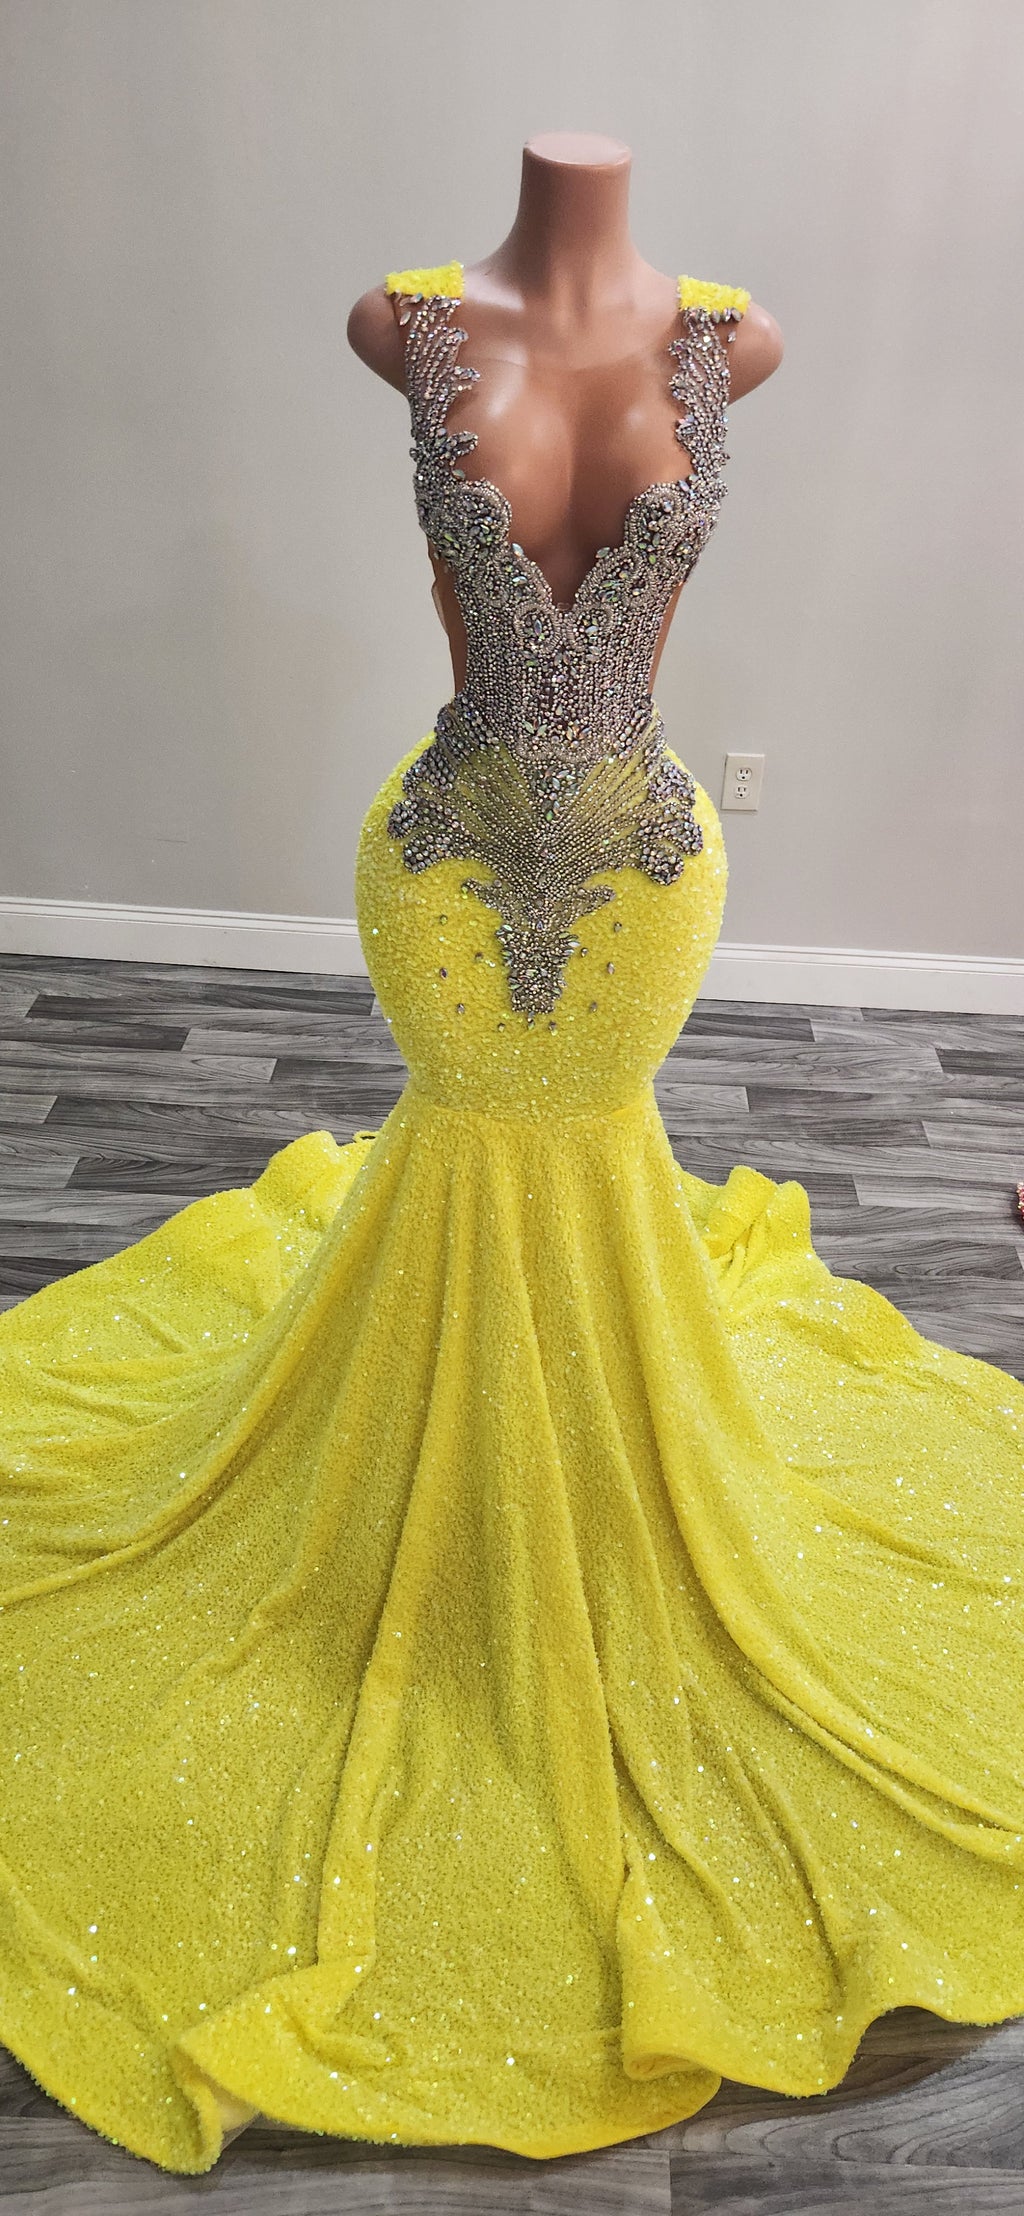 Sweet yellow dress